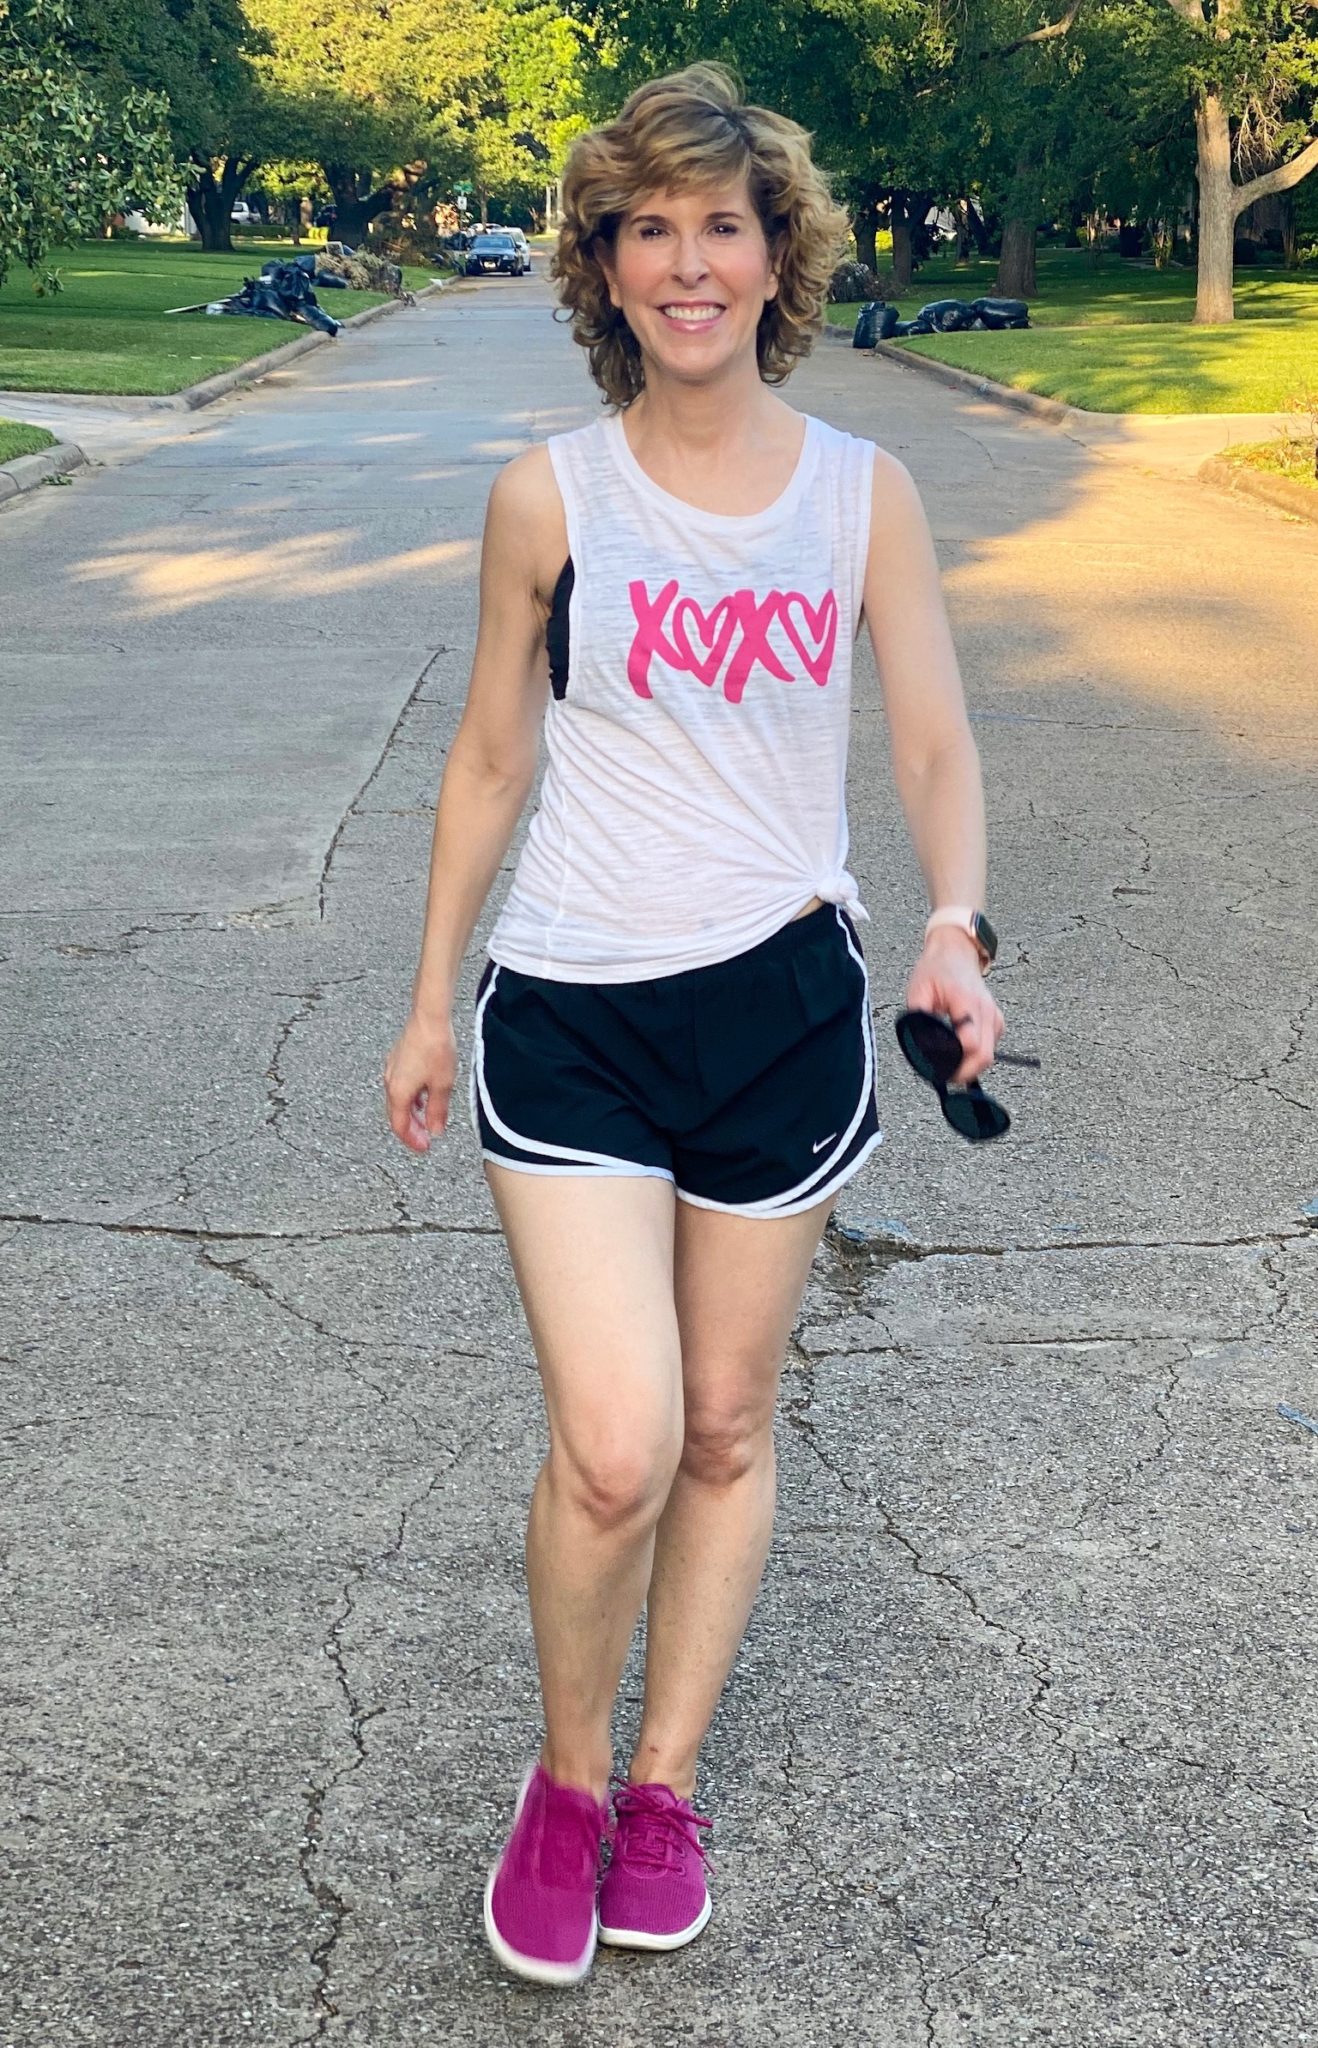 woman wearing grapic xoxo tee and exercise shorts walking